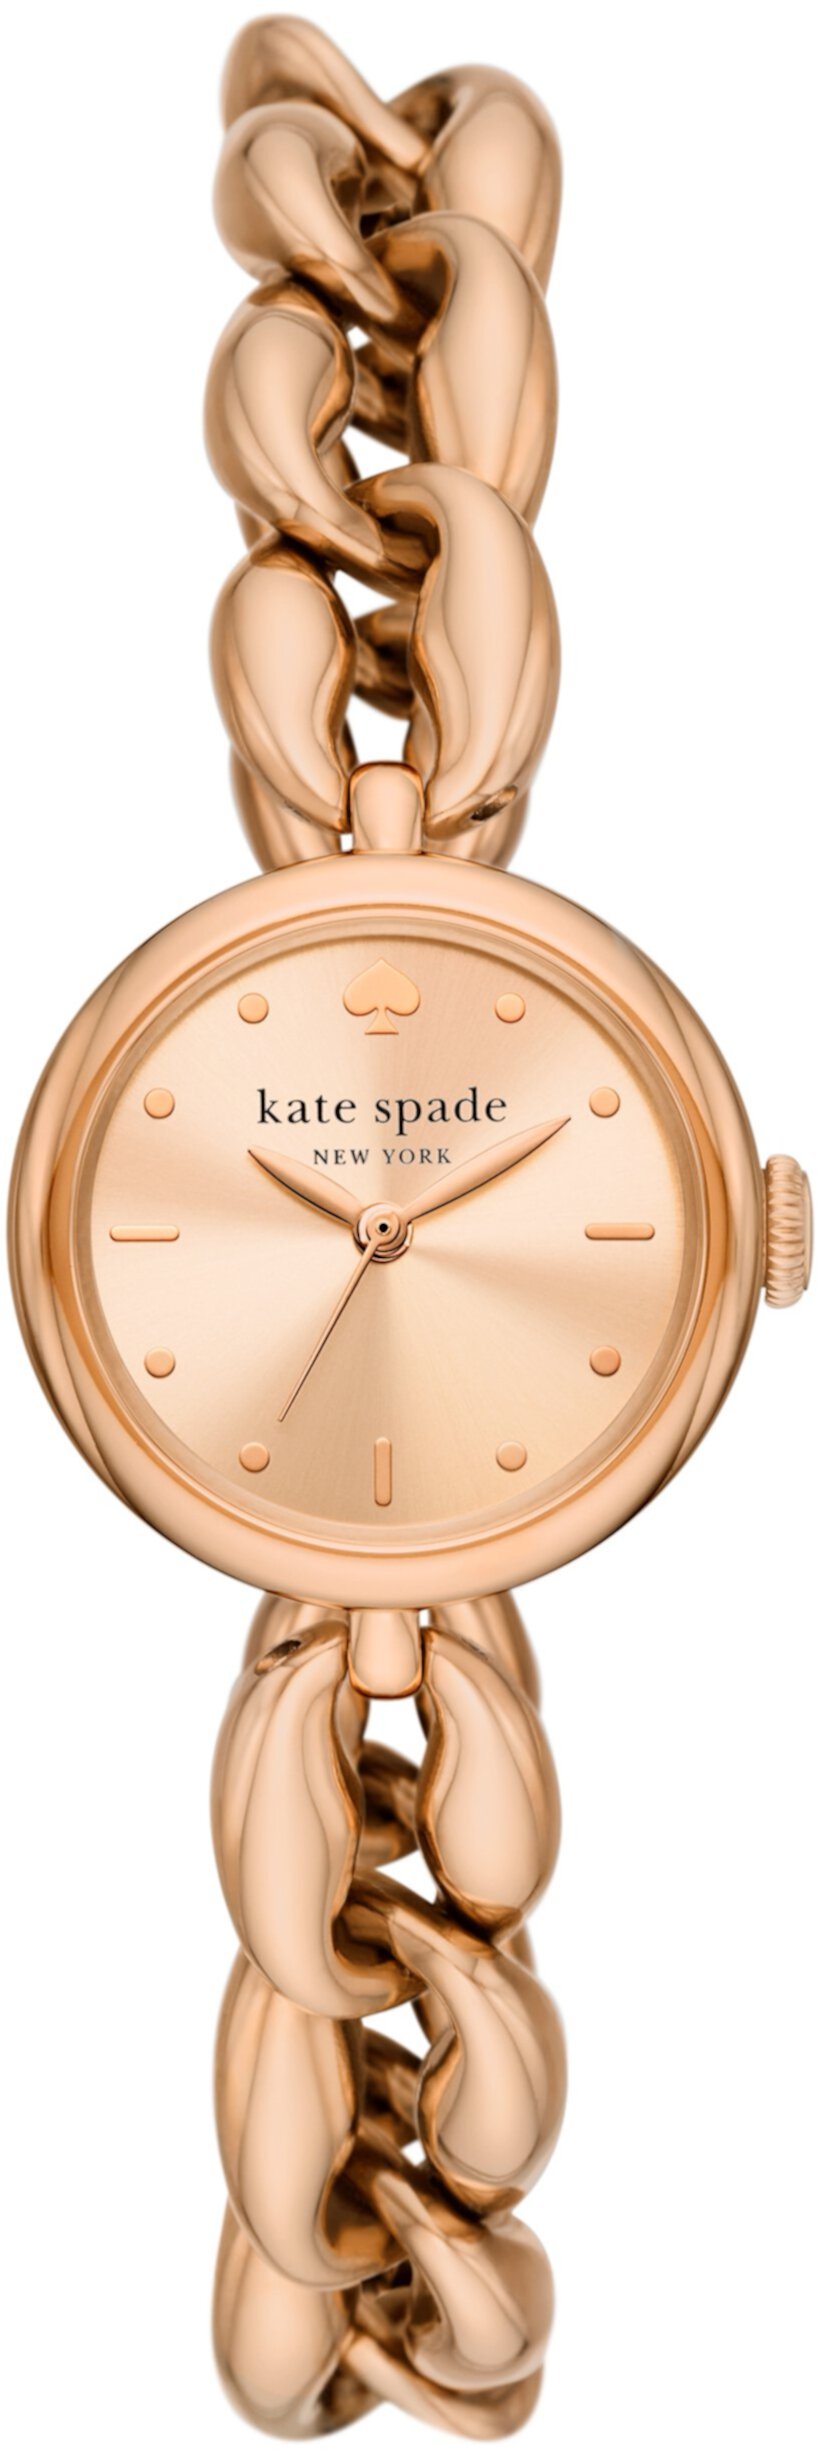 Часы Monroe из нержавеющей стали с тремя стрелками — KSW1801 Kate Spade New York